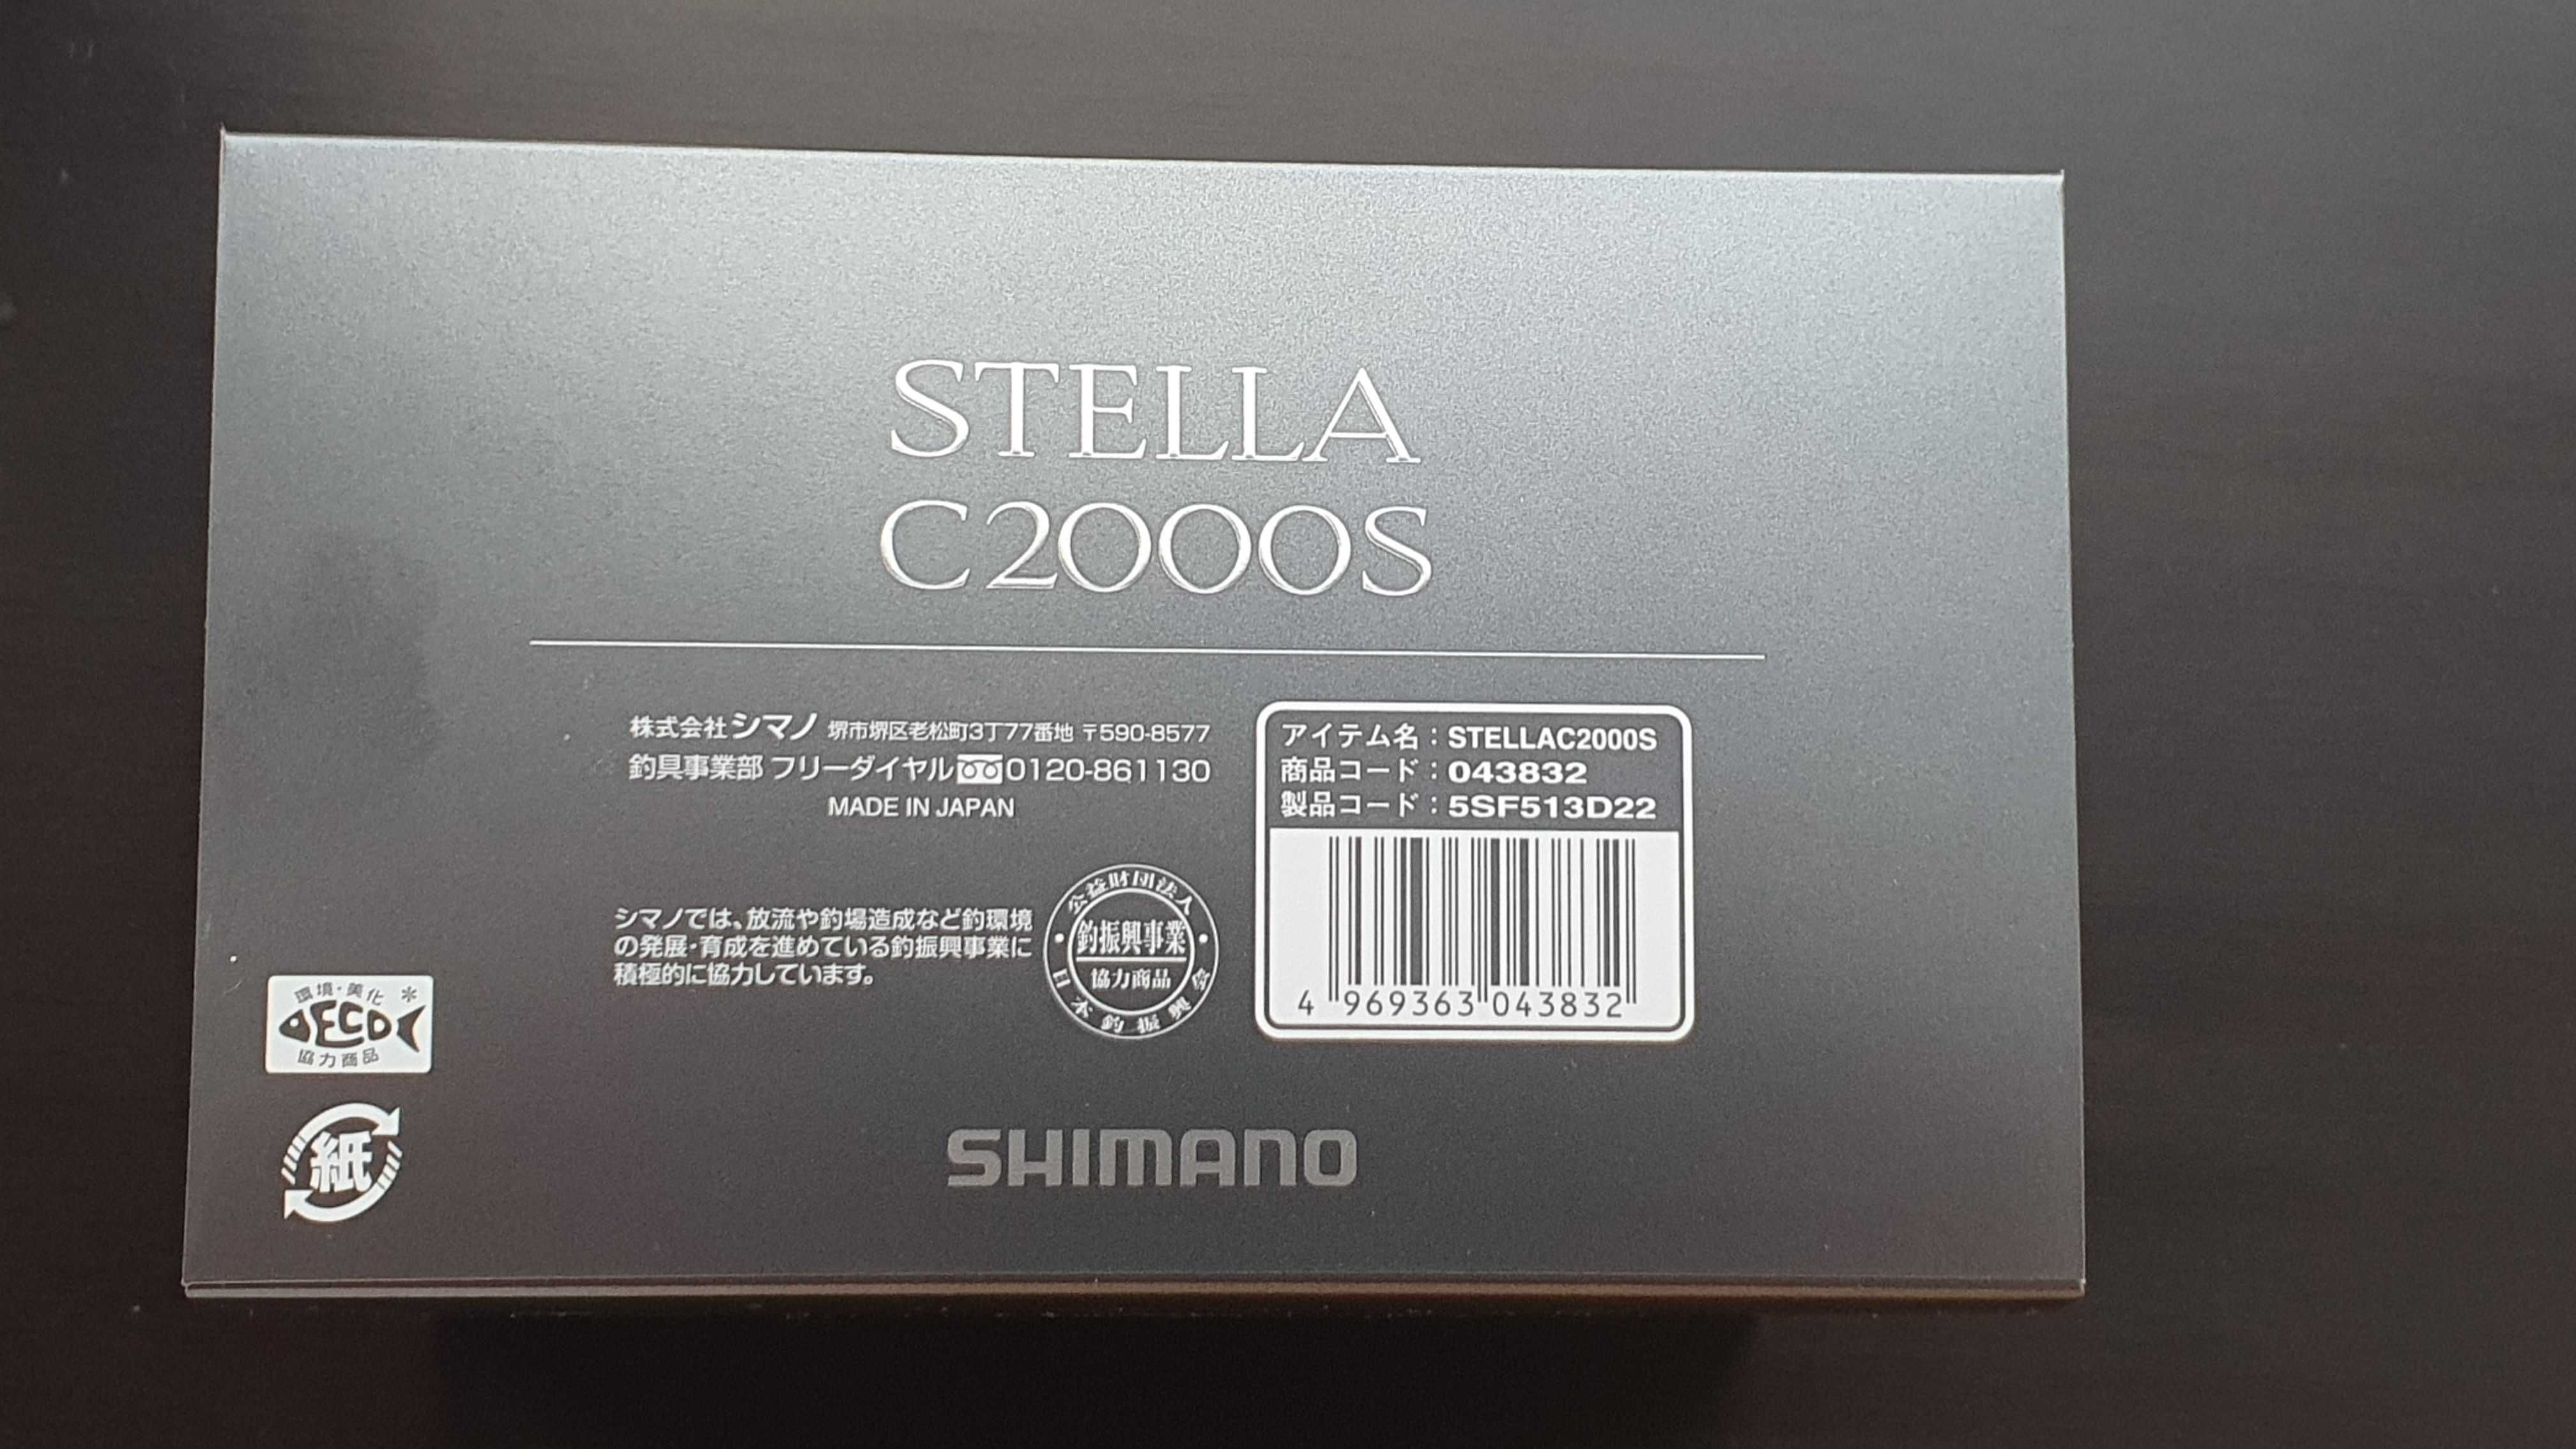 Shimano 22 STELLA C2000S 2500S